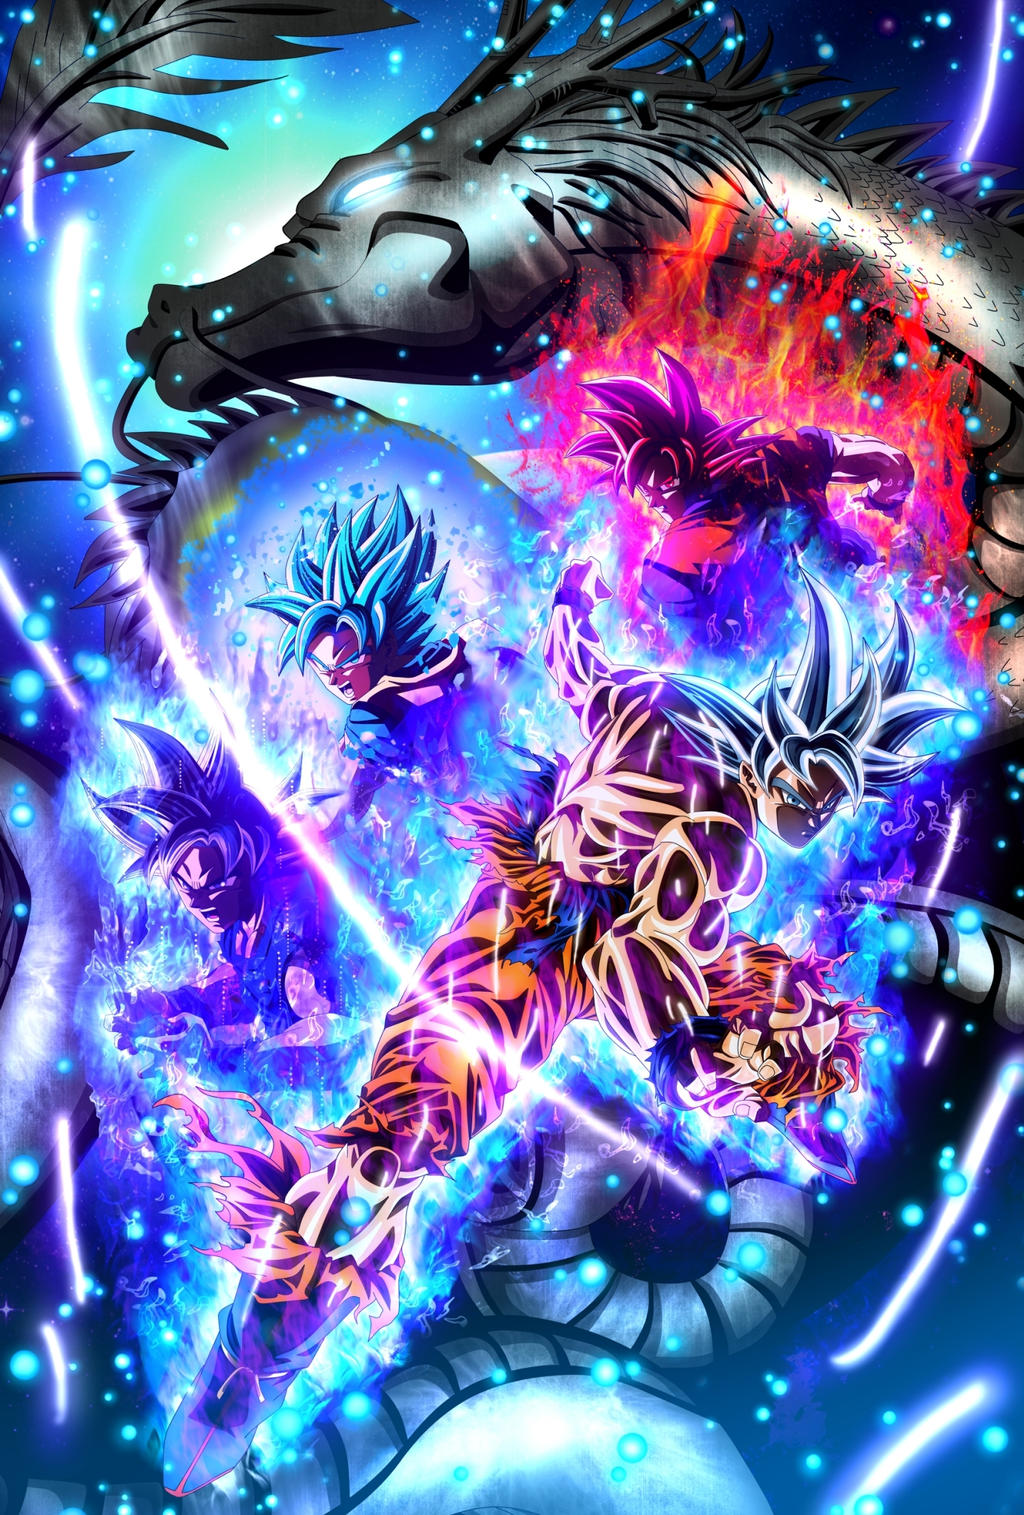 Dragon ball super Goku 1680x1050 wallpaper by gameriuxlt on DeviantArt